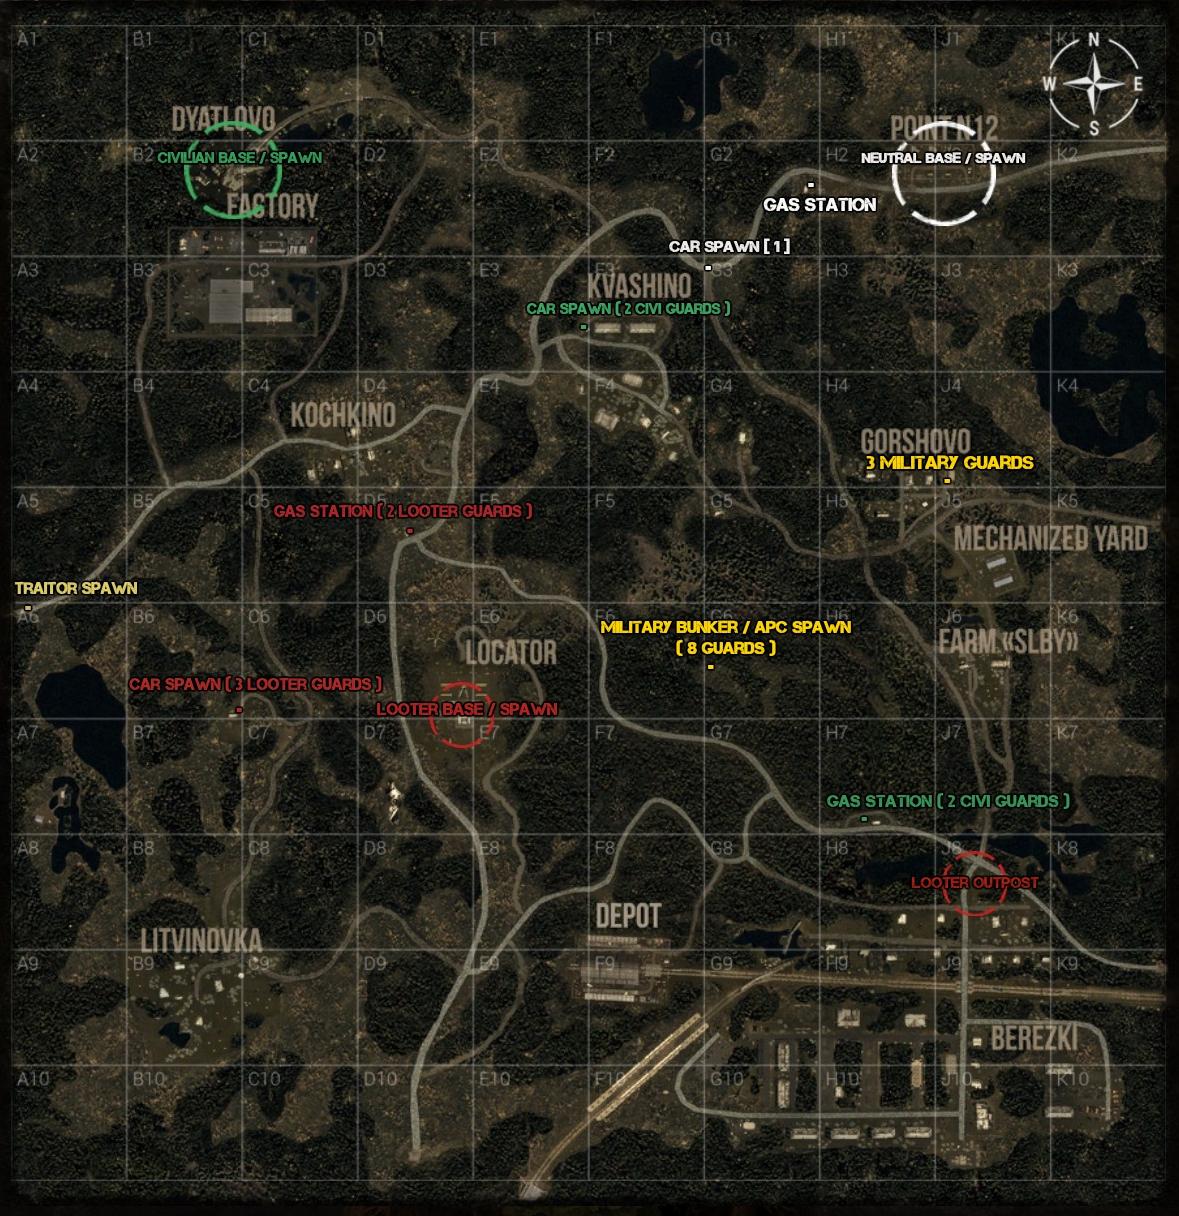 Next Day: Survival - Survival Map